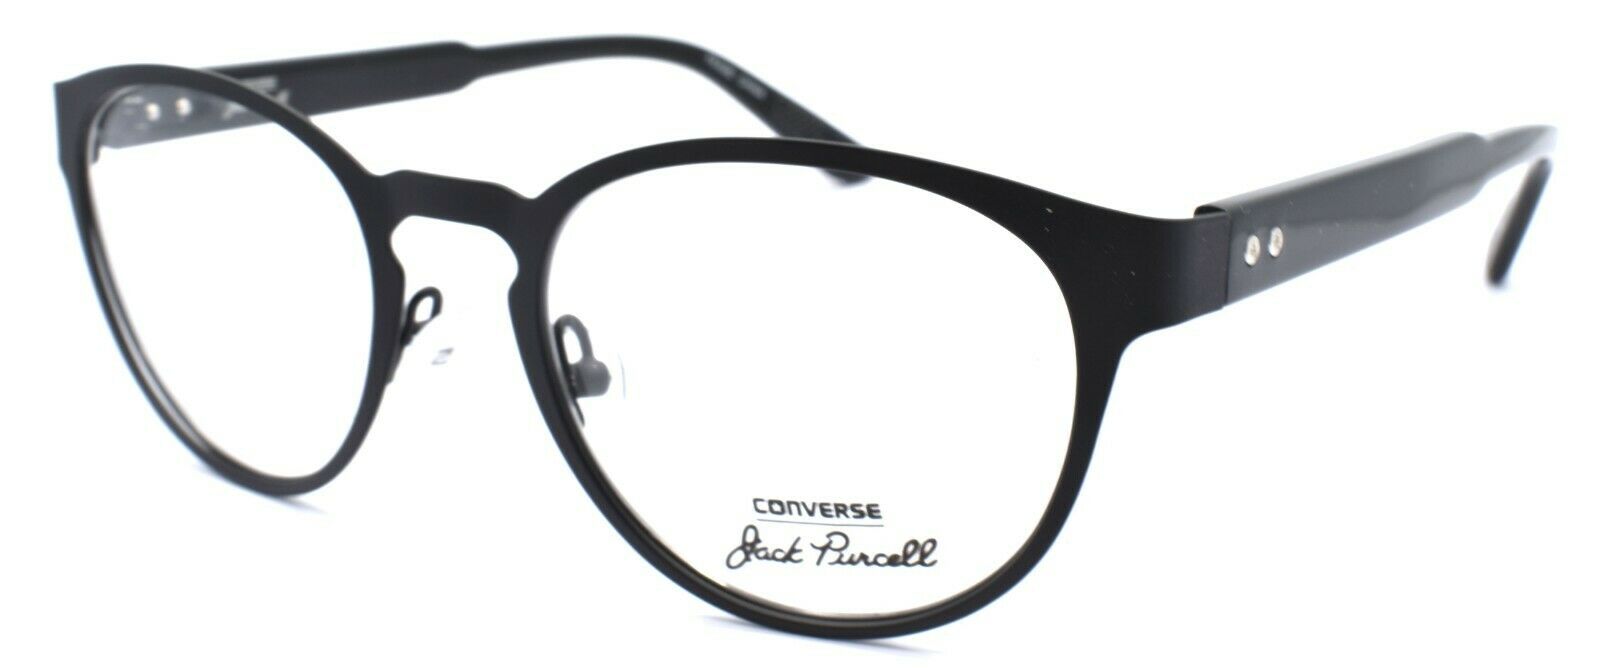 1-CONVERSE Jack Purcell P009 Men's Eyeglasses Frames ROUND 48-19-145 Matte Black-751286273427-IKSpecs